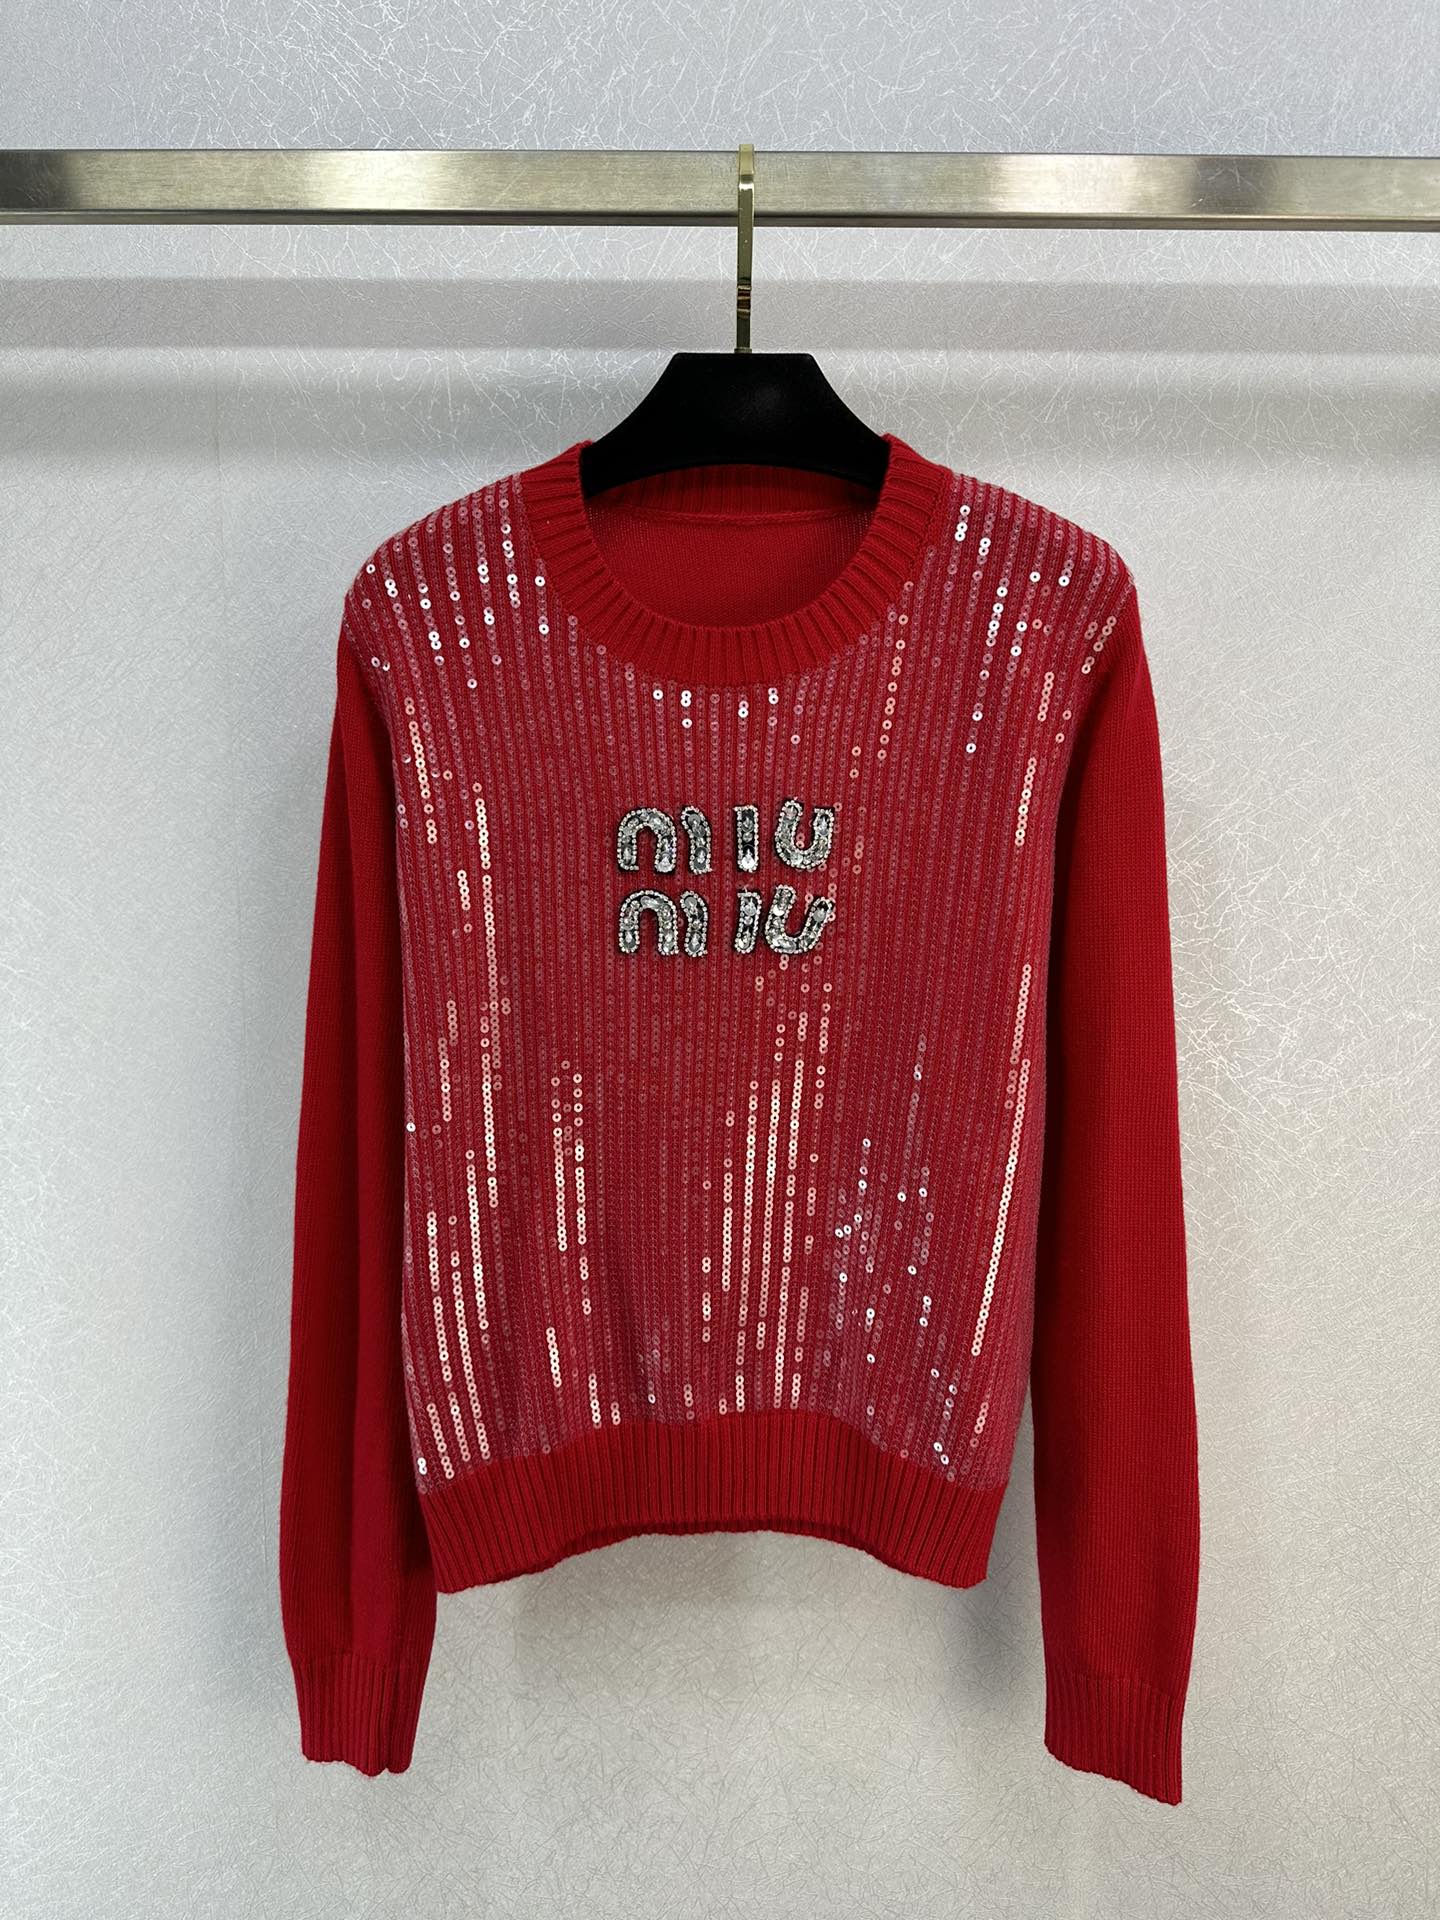 MiuMiu Clothing Shirts & Blouses Pink Knitting Spring Collection